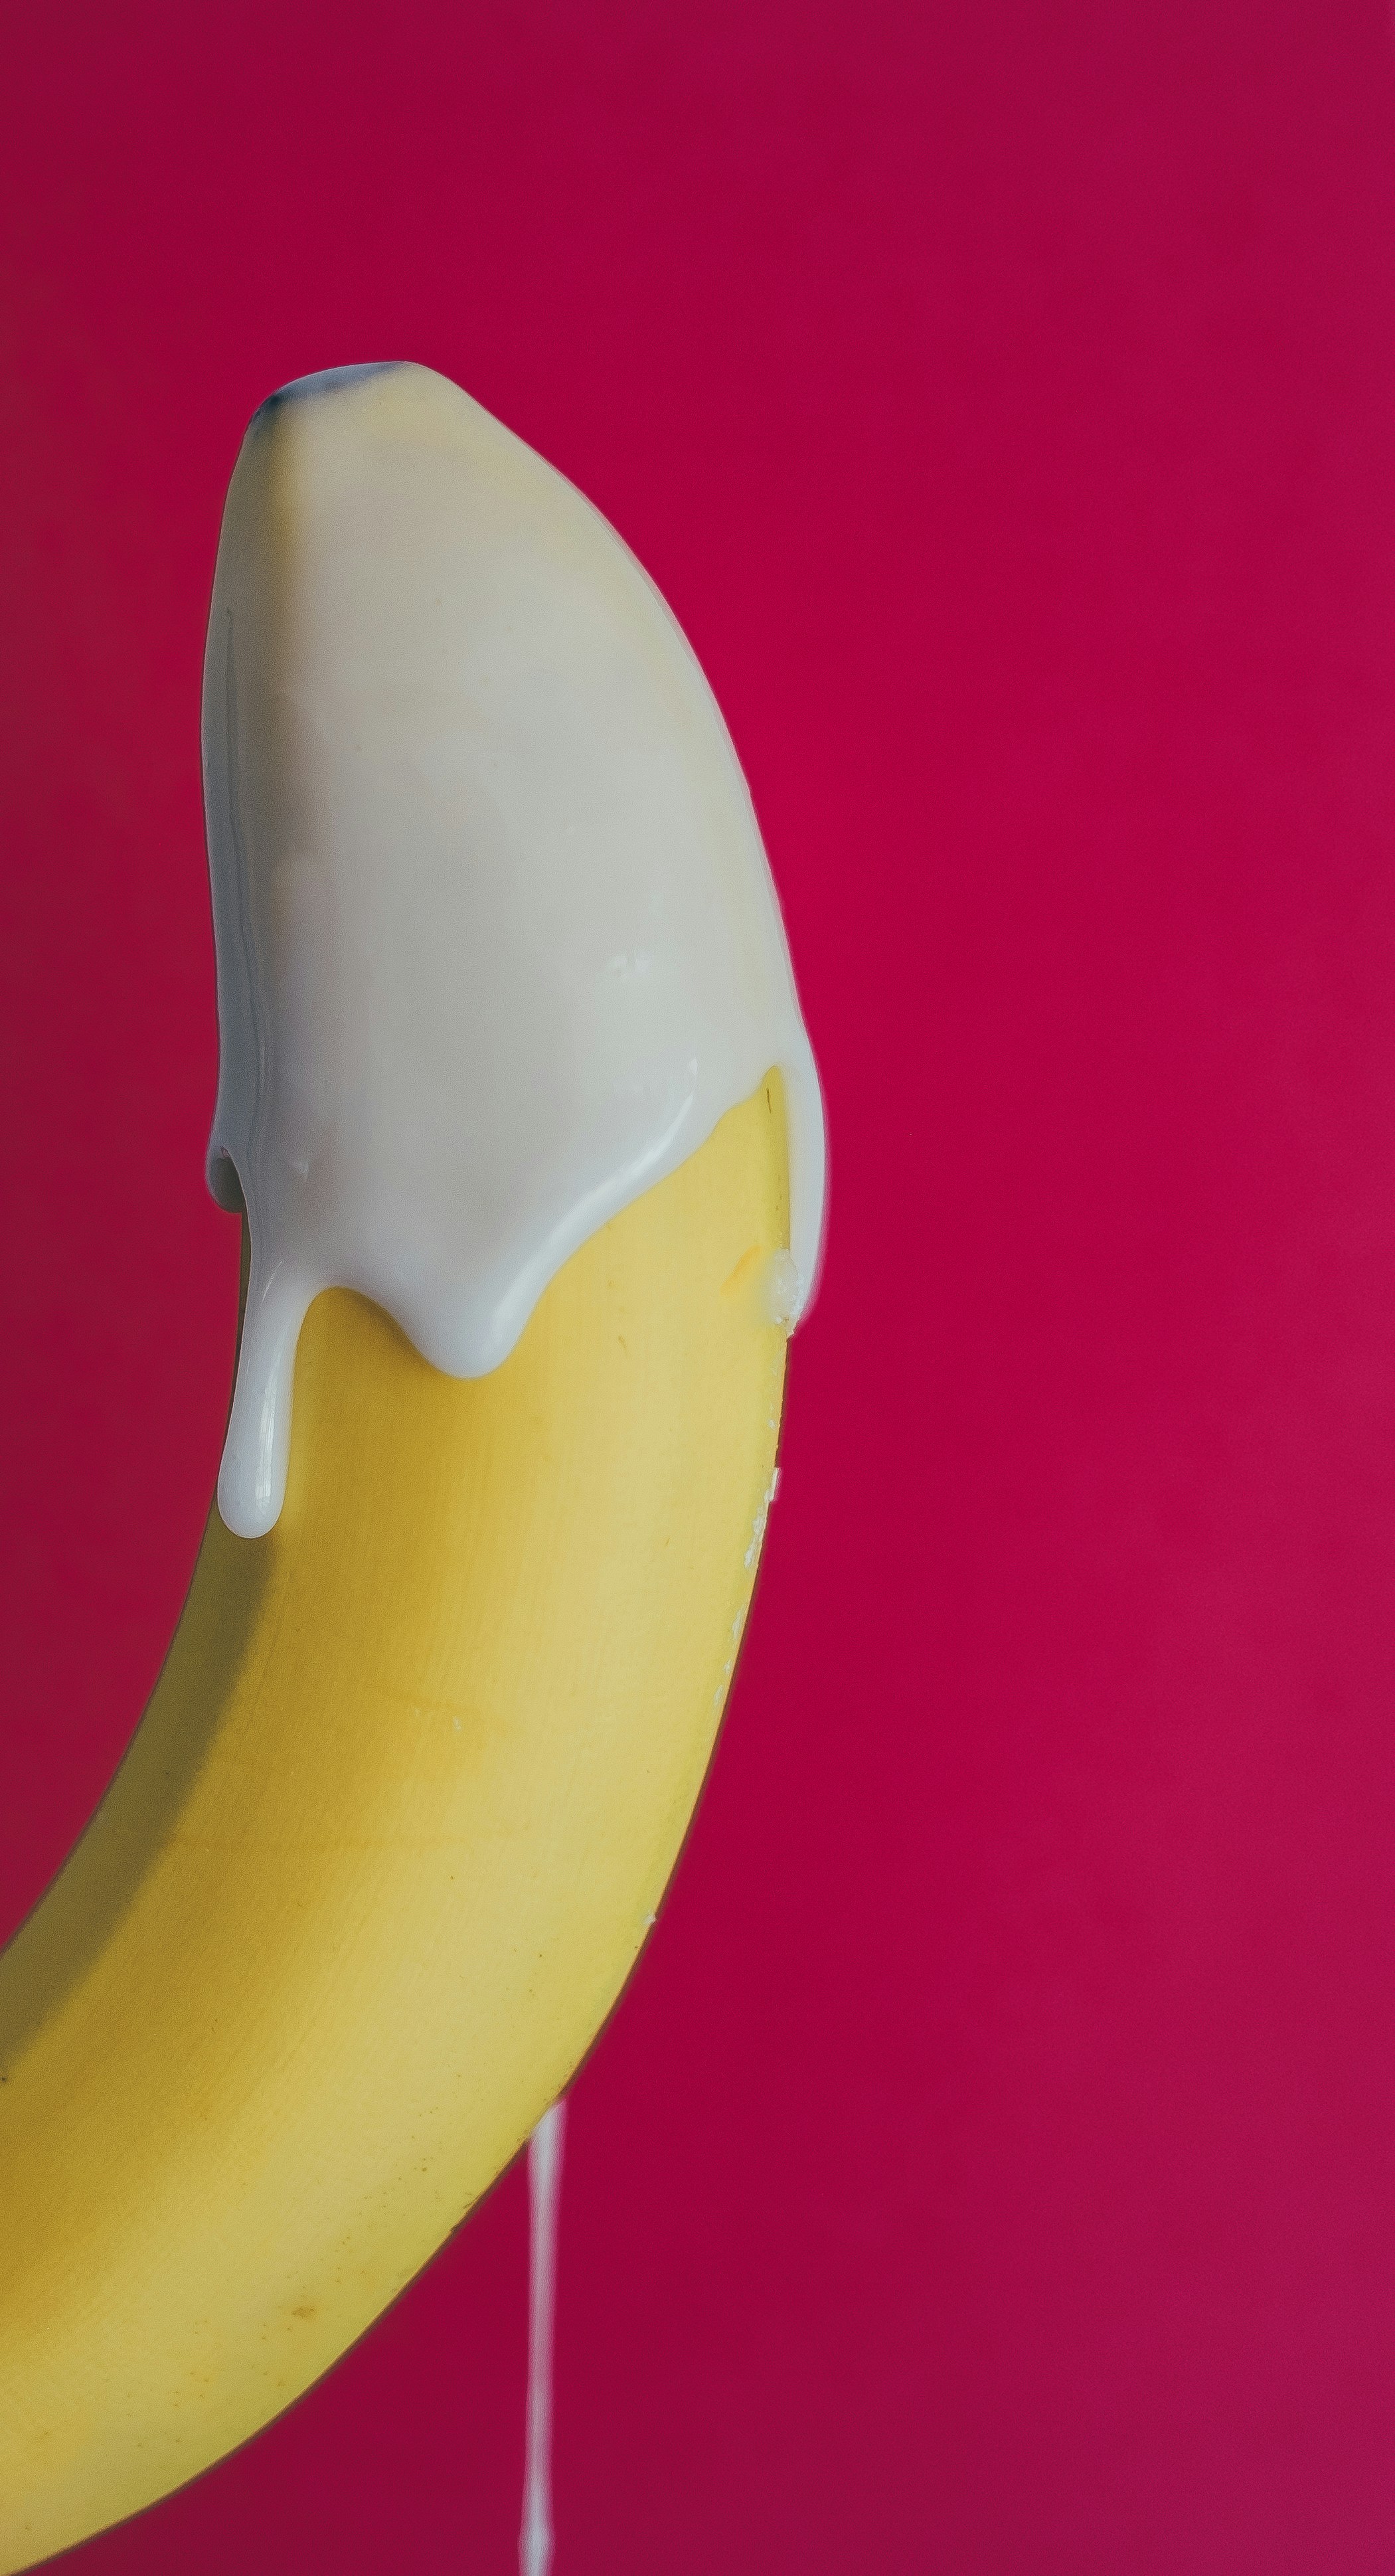 Sex Banana Pictures Download Free Images on Unsplash image